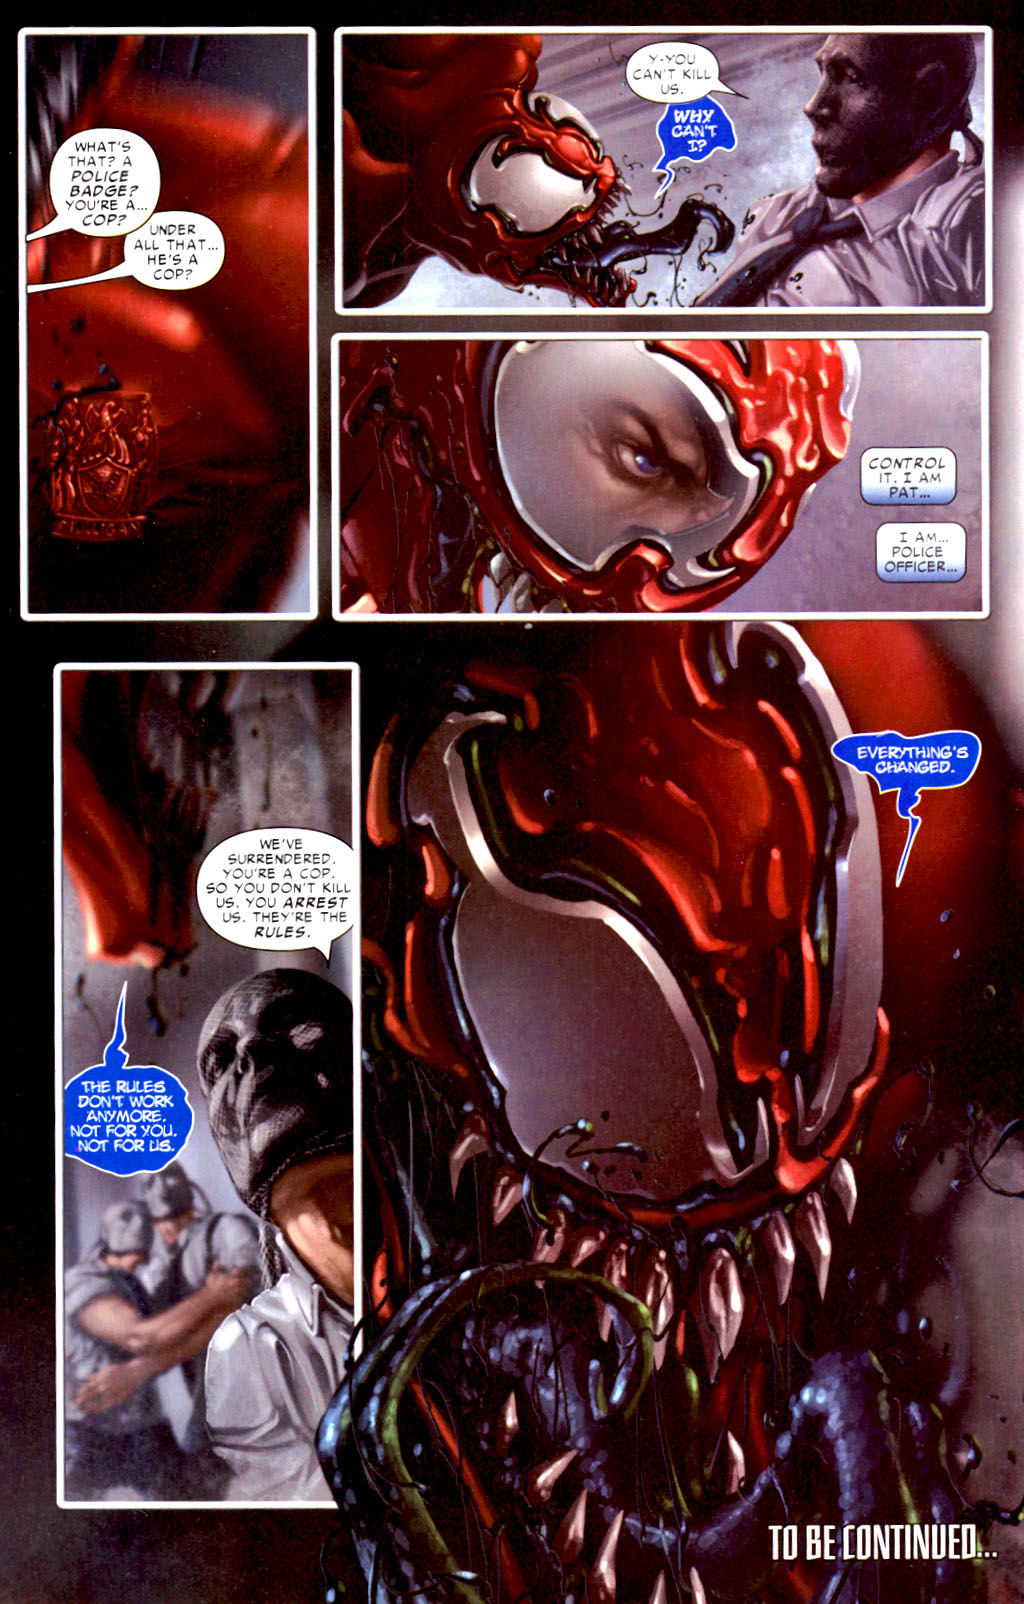 Venom vs. Carnage #3 - A Child Is Born, Part 3: The Monster Inside Me 